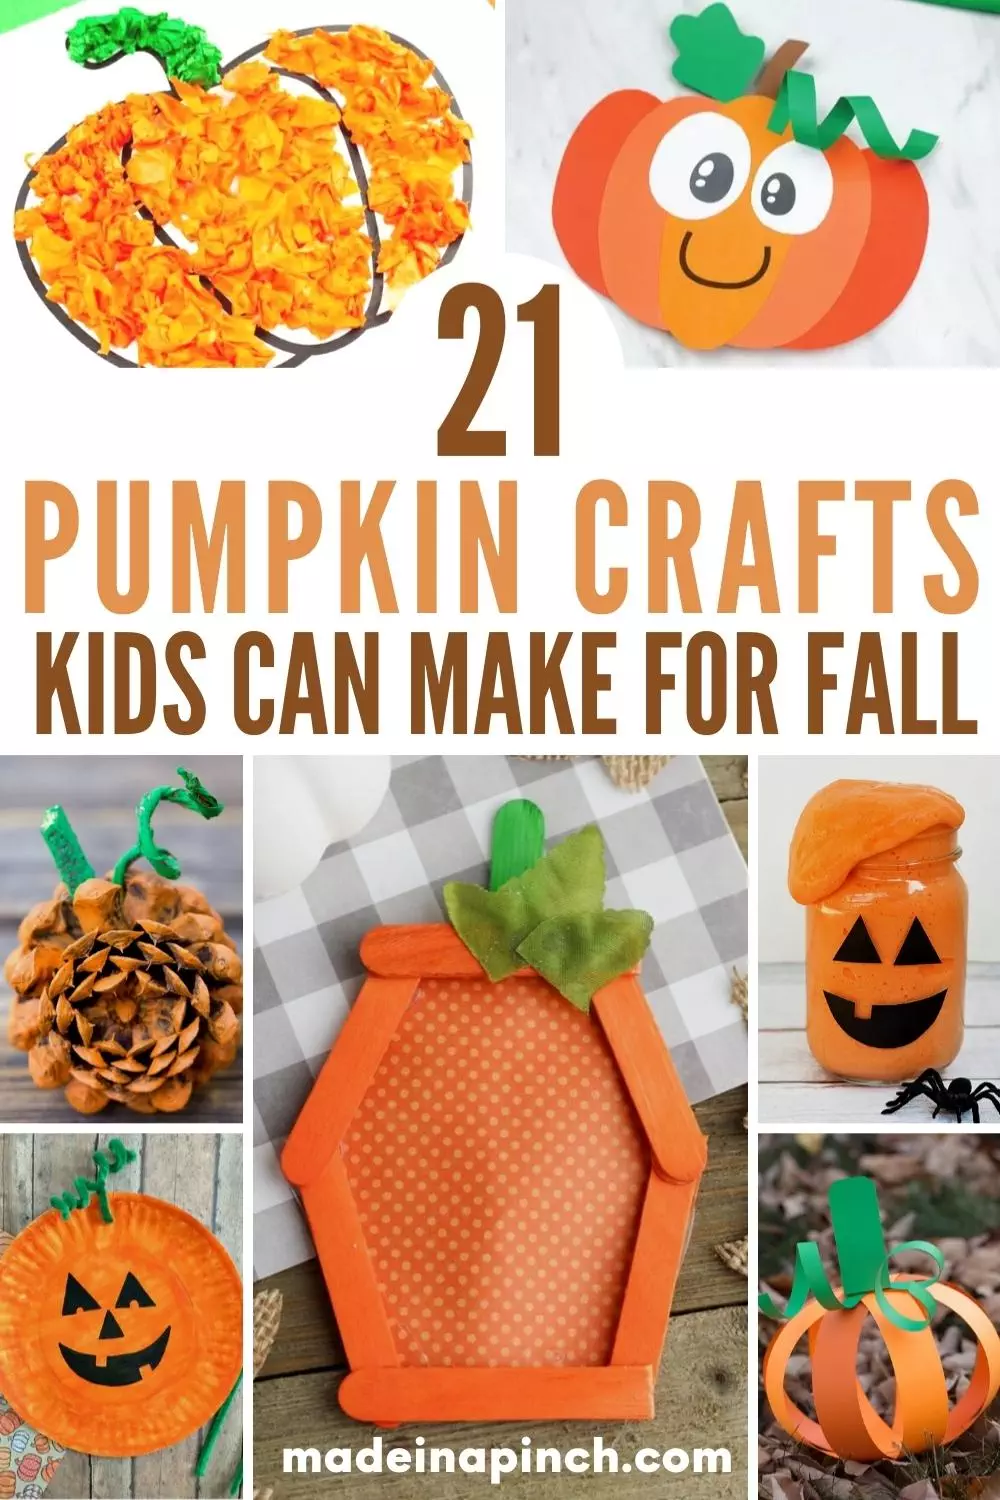 Pumpkin crafts for kids pin image